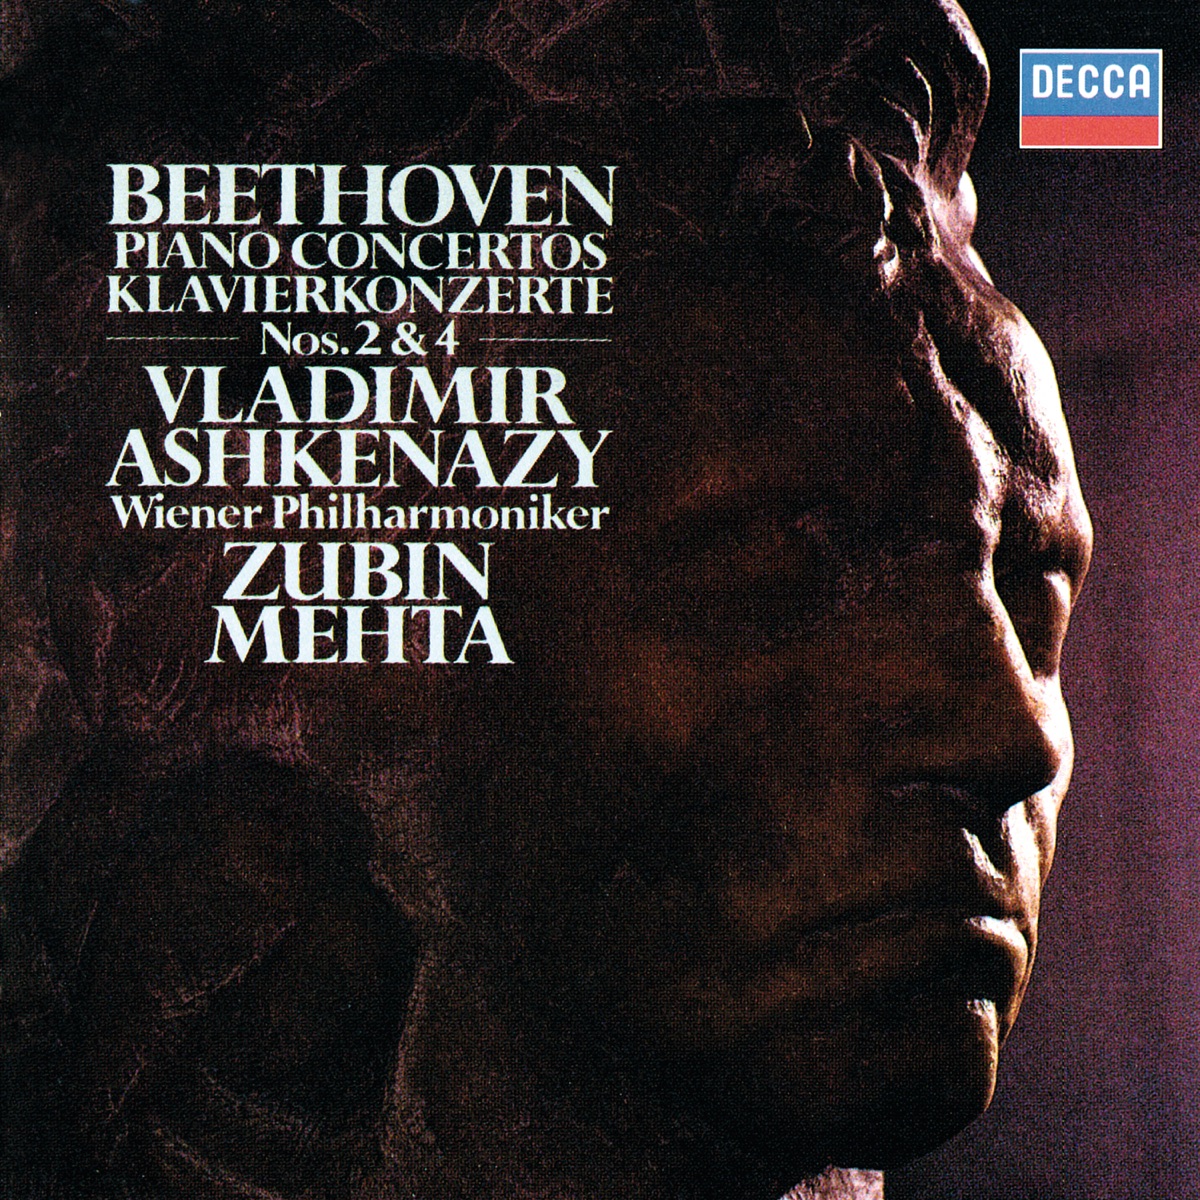 Beethoven: Piano Concertos Nos. 2 & 4 by Vladimir Ashkenazy, Vienna  Philharmonic & Zubin Mehta on Apple Music